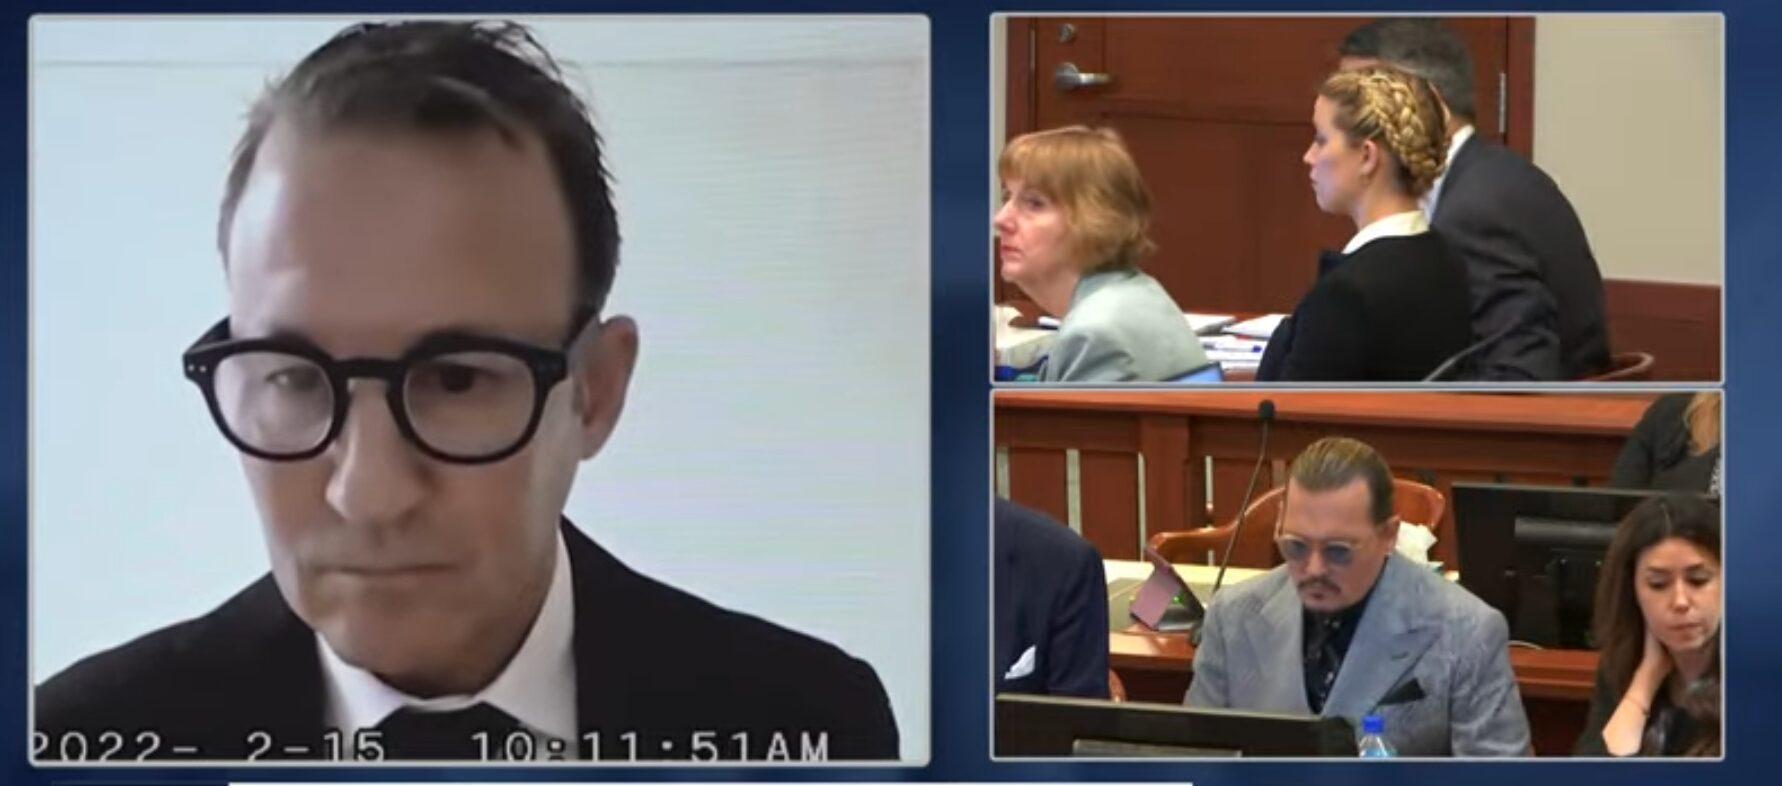 Depp's attorney Adam Waldman